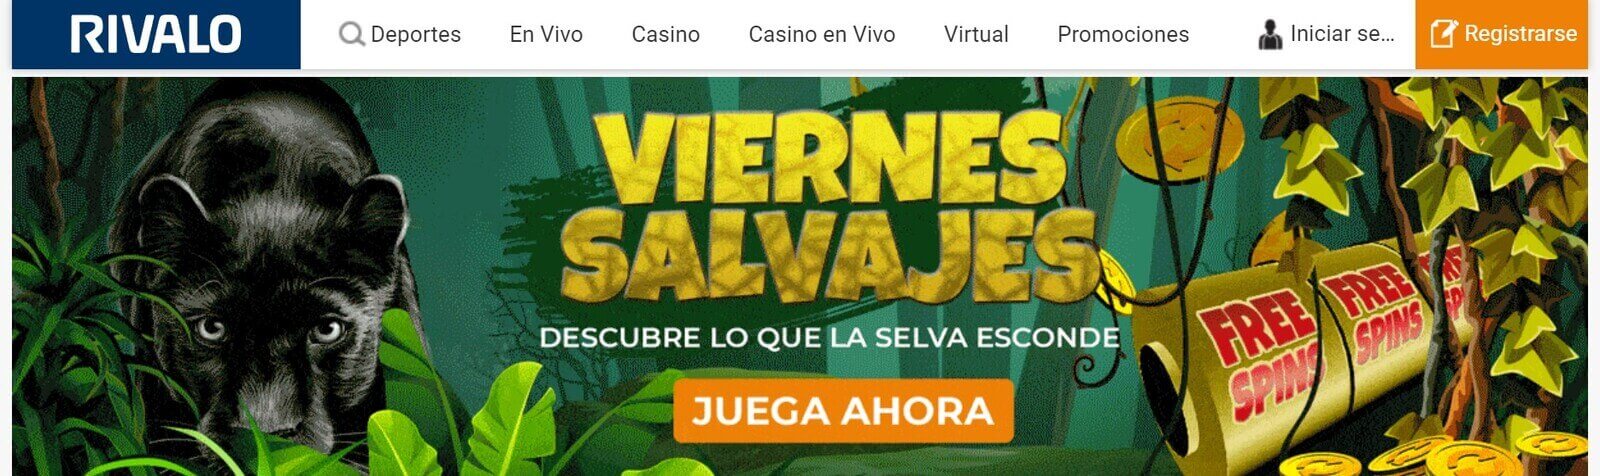 Rivalo Casino bienvenida